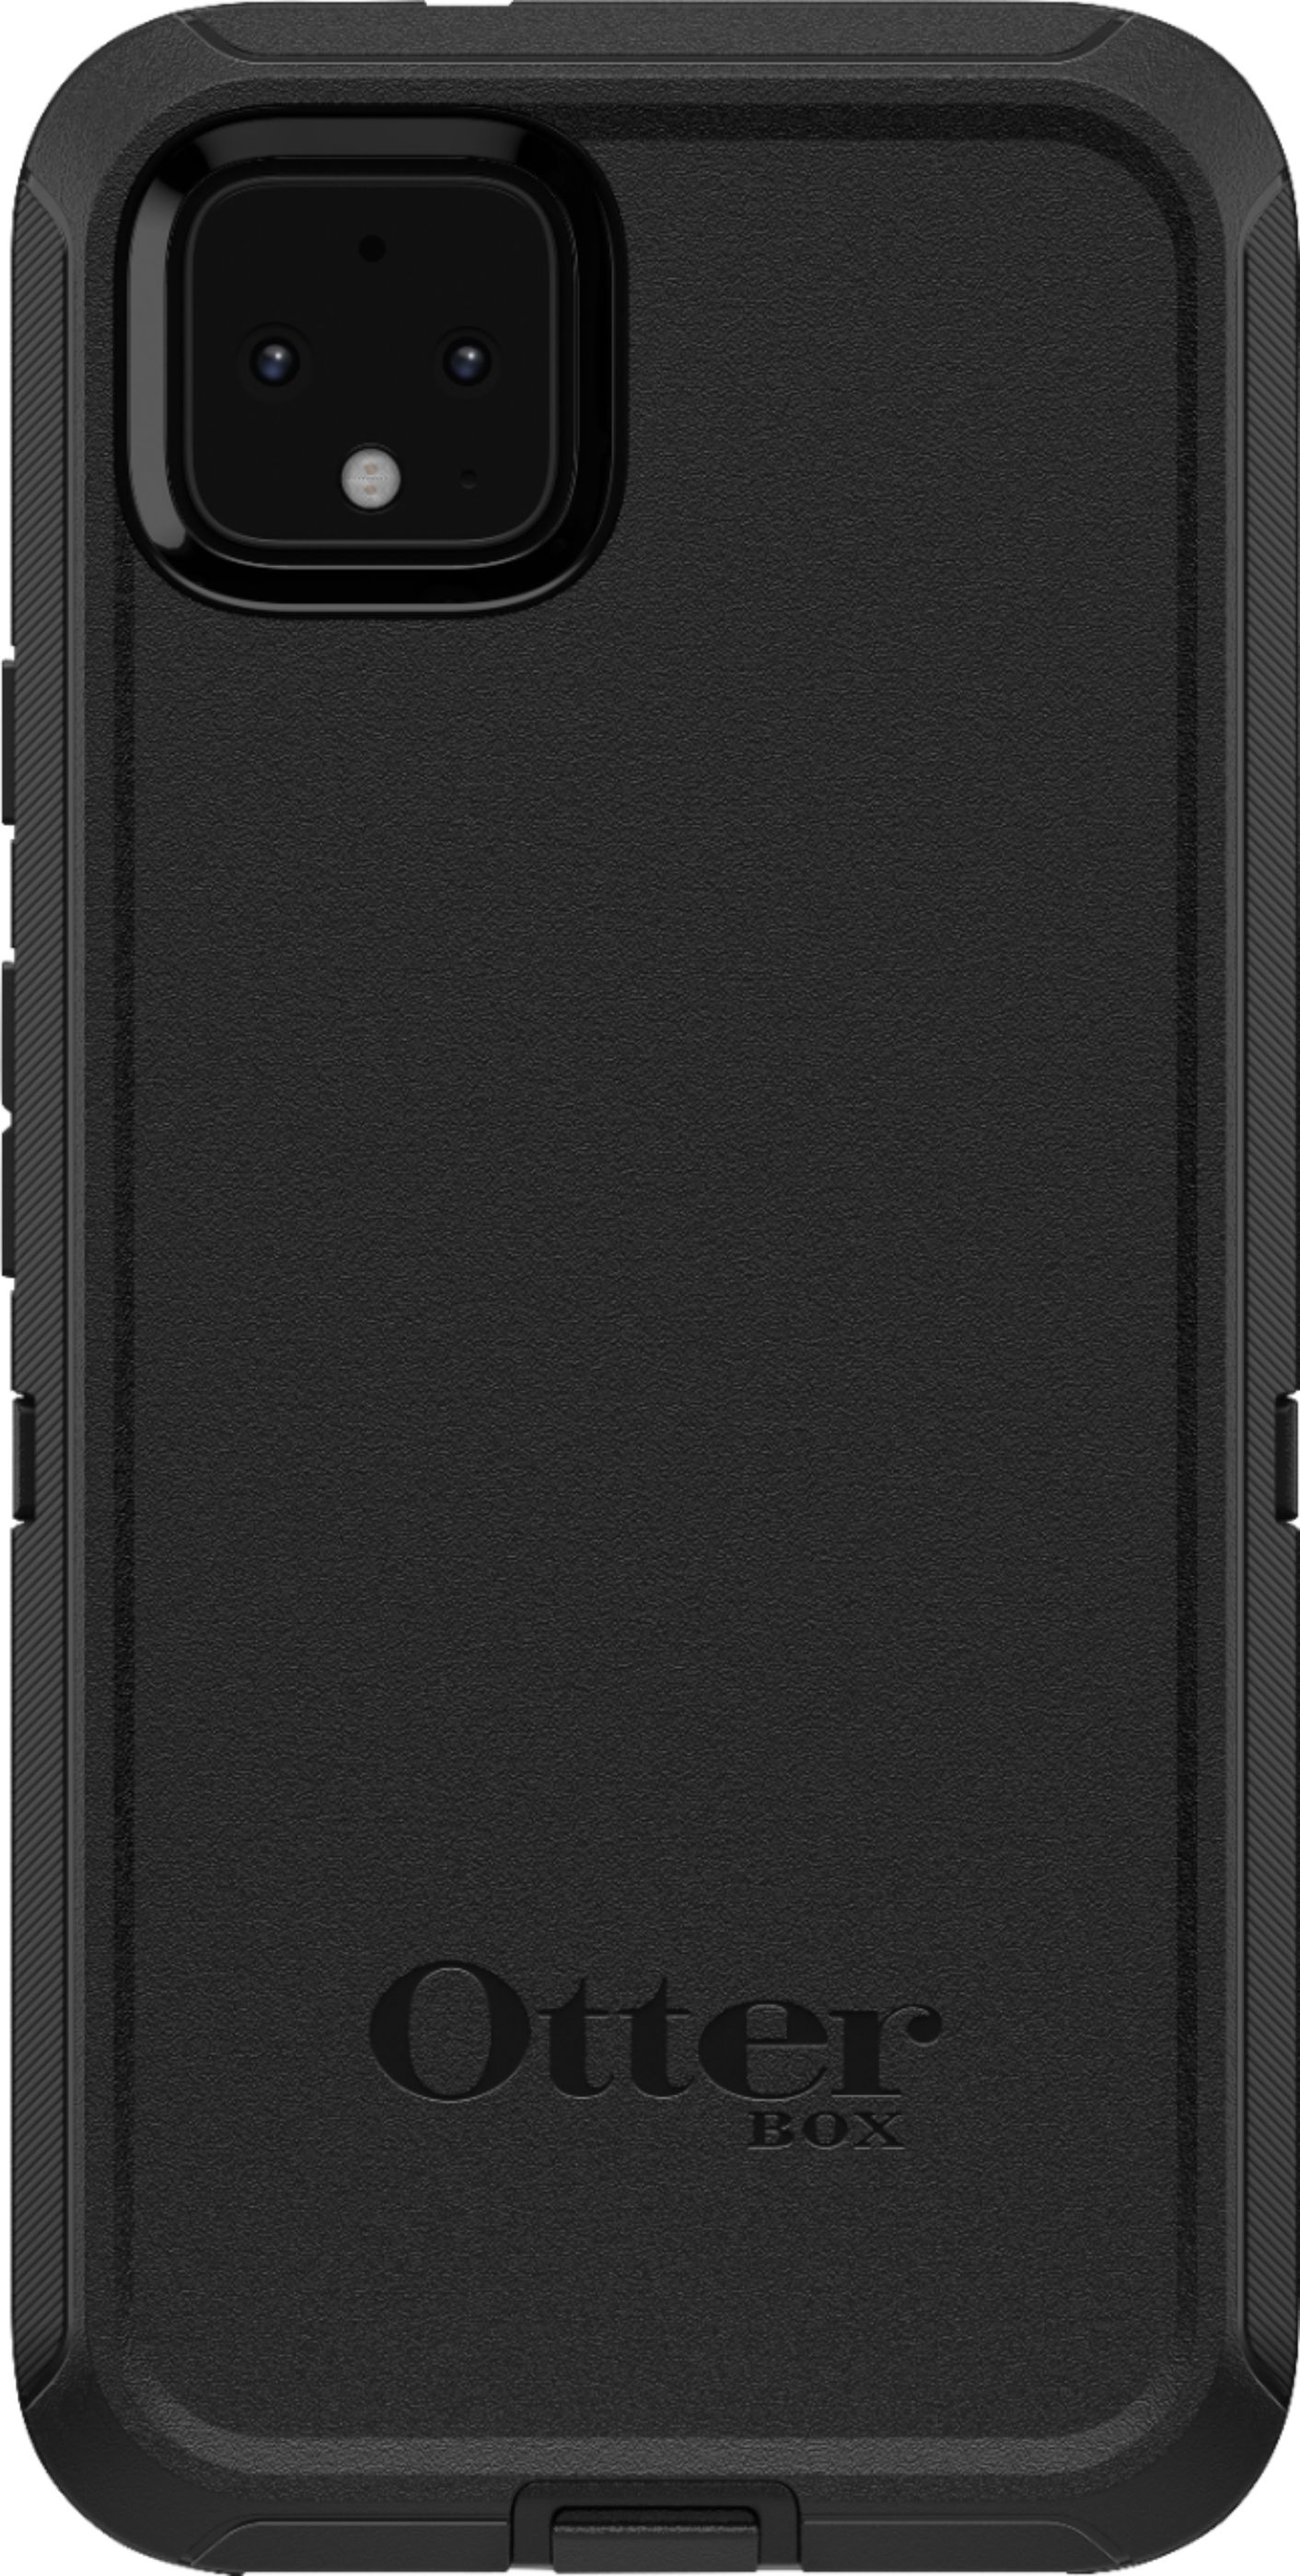 OtterBox - Defender Series Case for Google Pixel 4 XL - Black